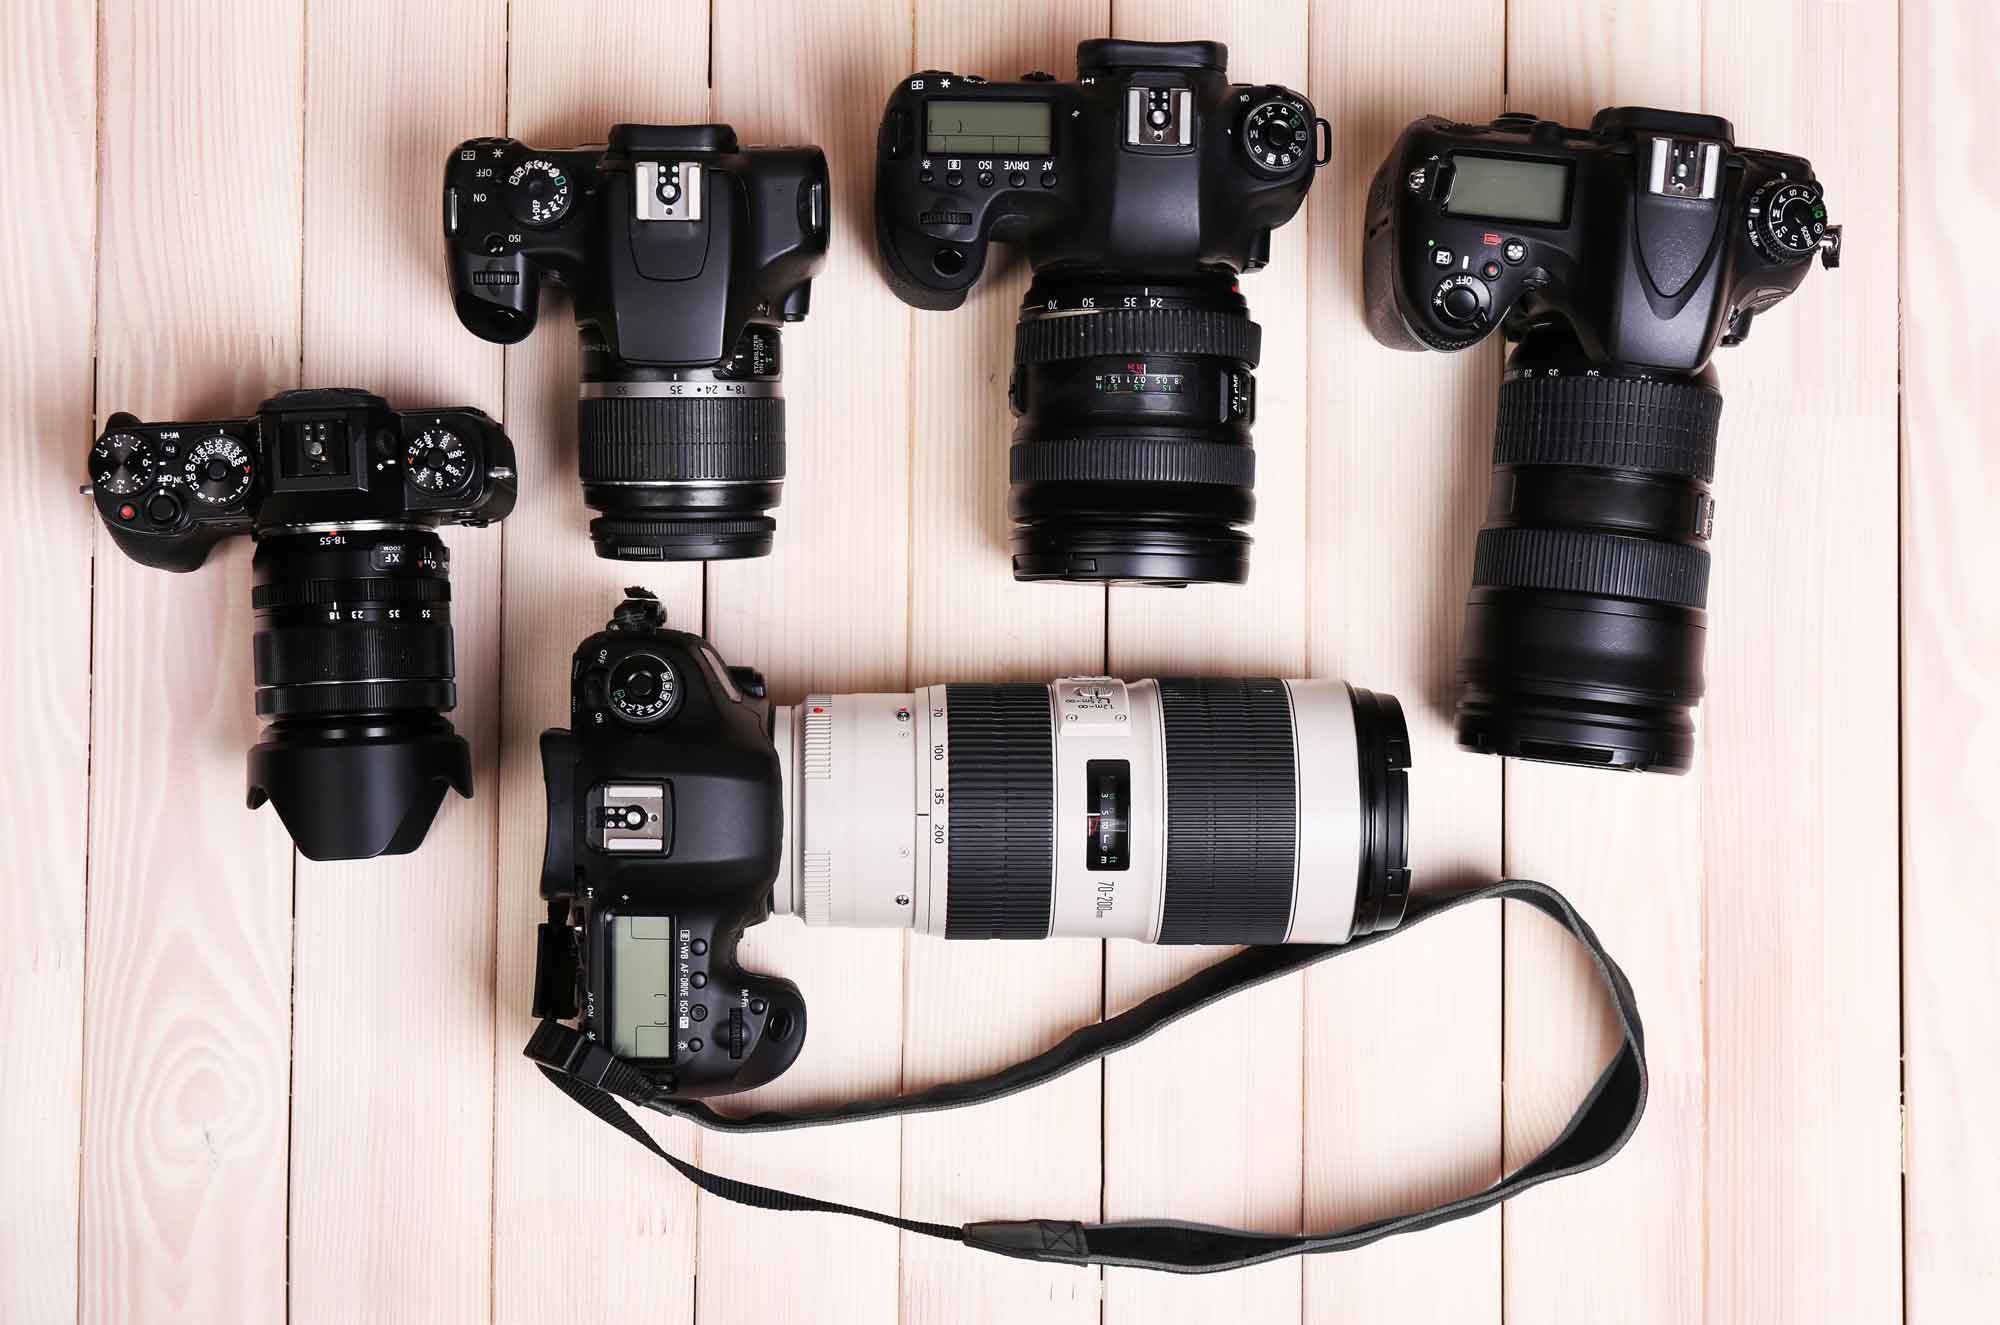 Adorama: Best Photography Gears & Equipment